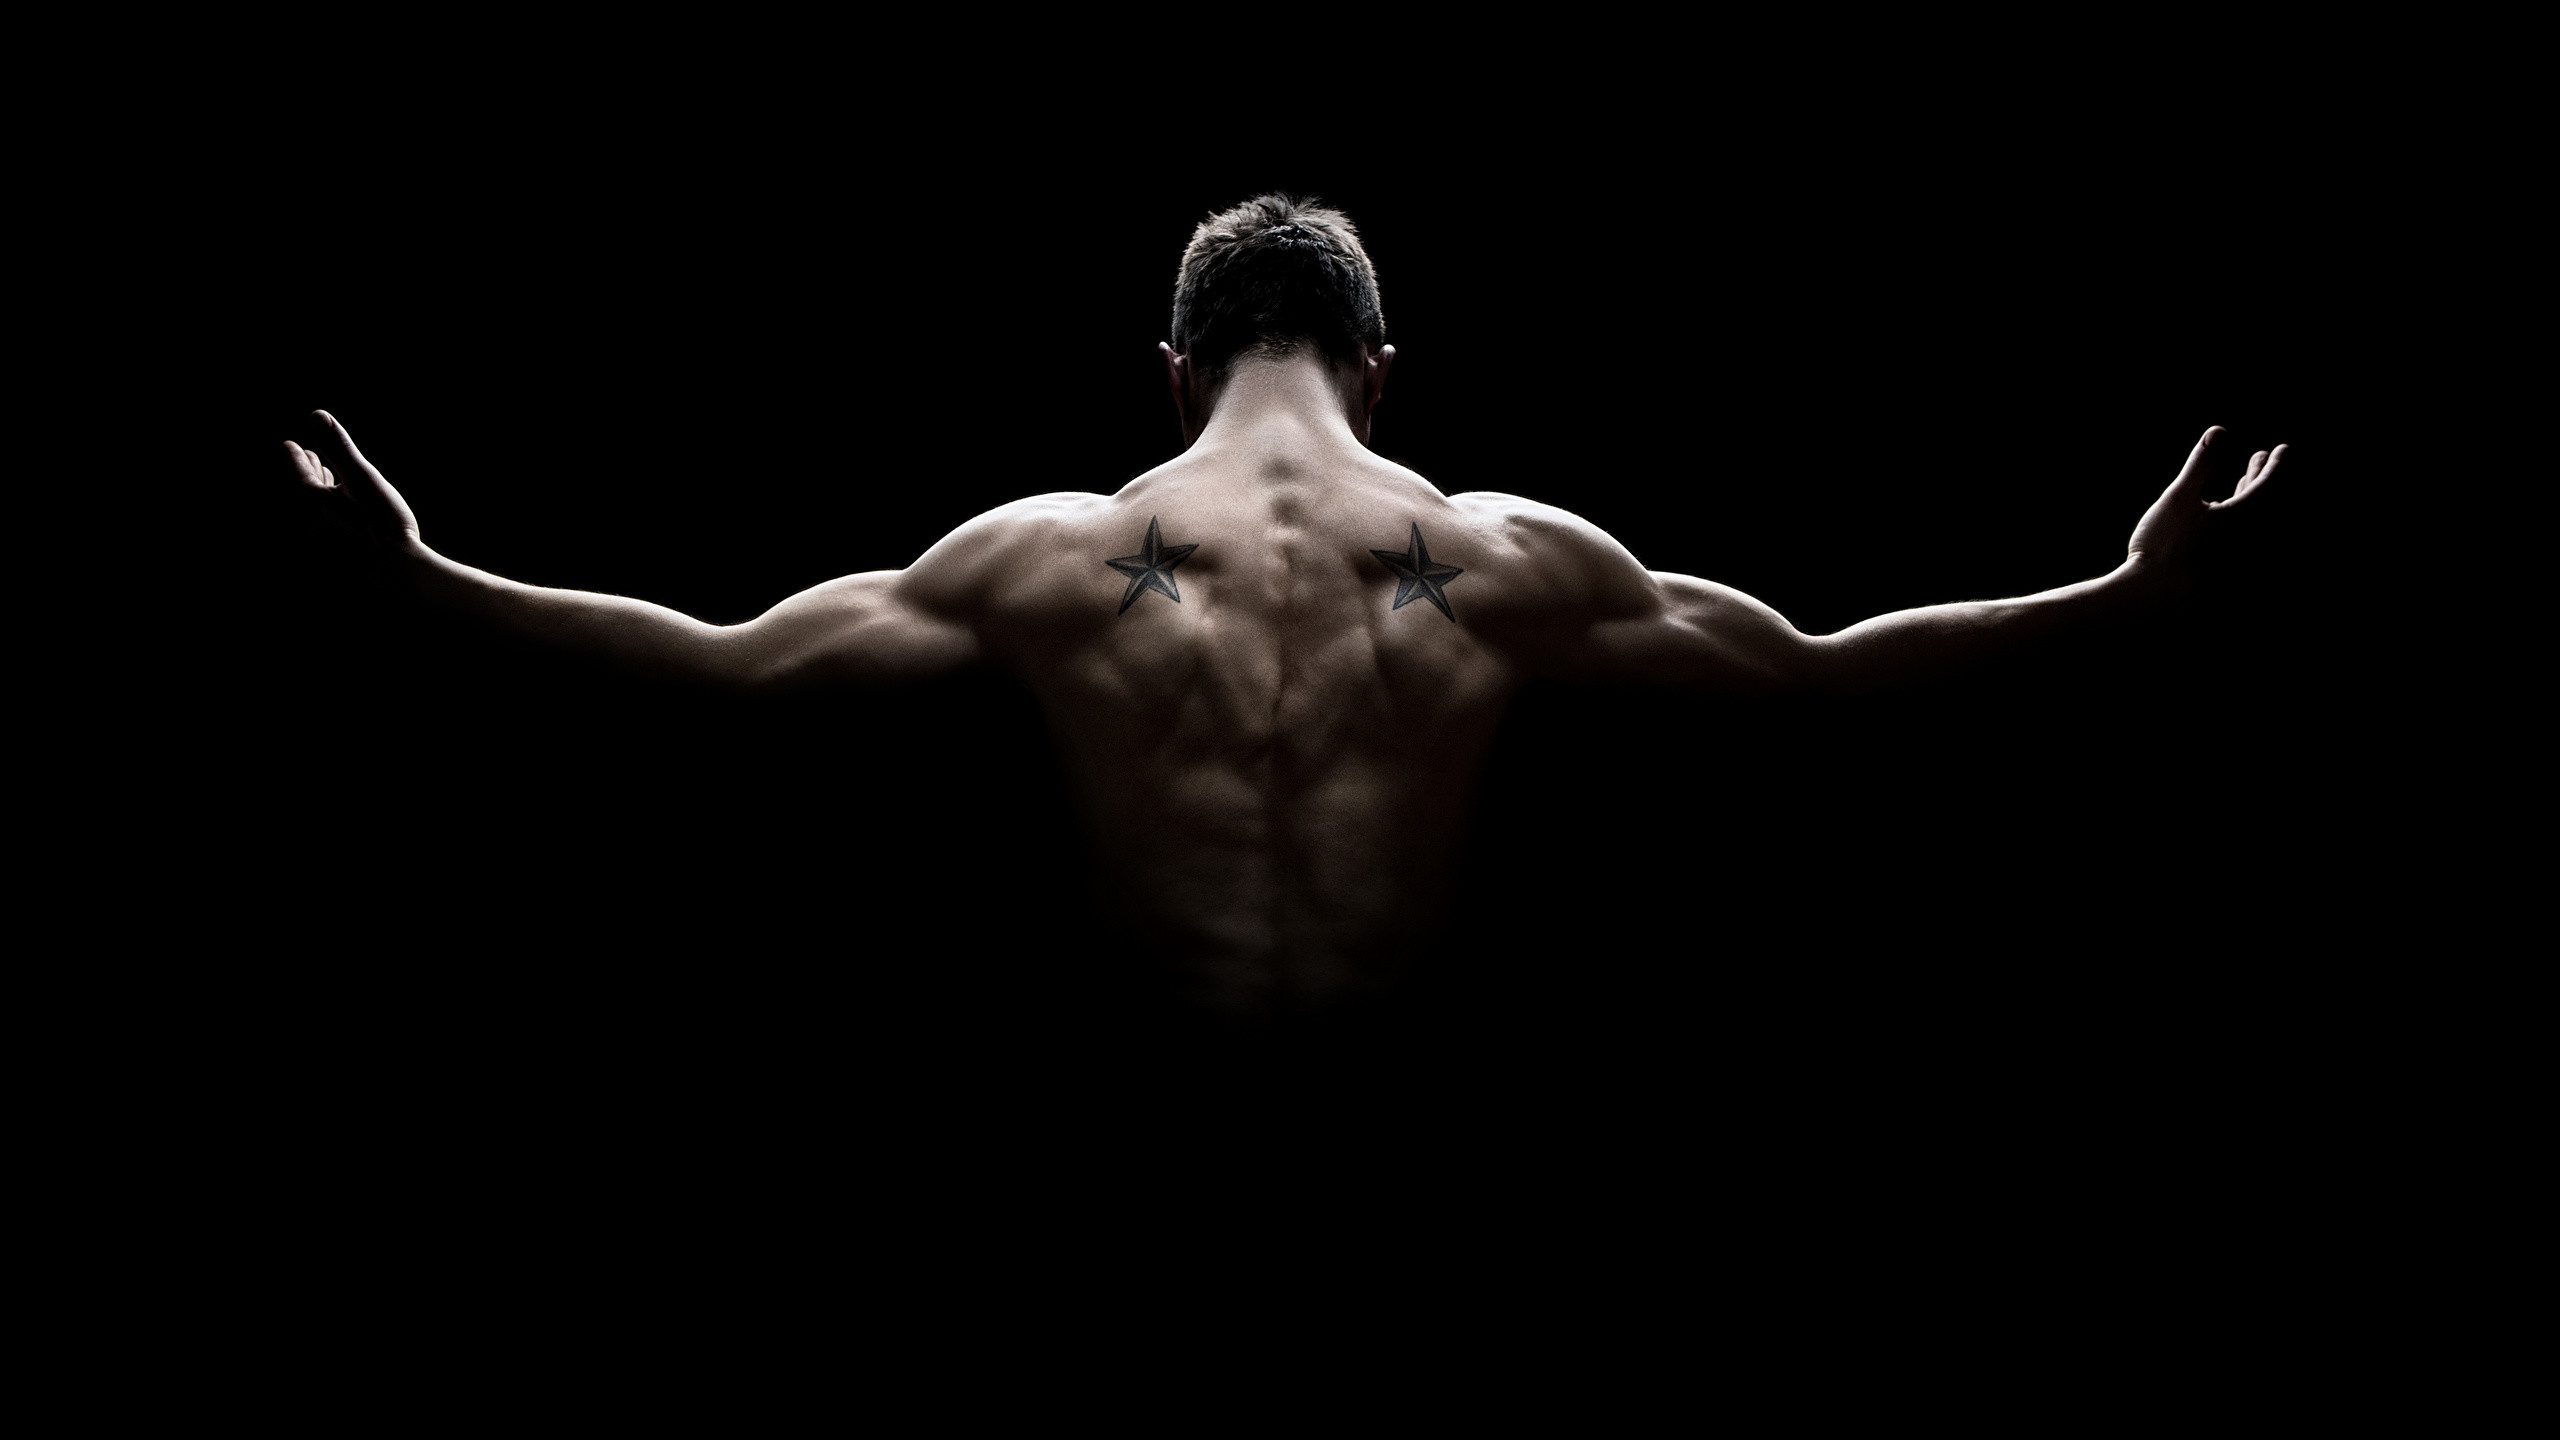 2560x1440 Wallpaper Men Muscle Human back Black background  Man